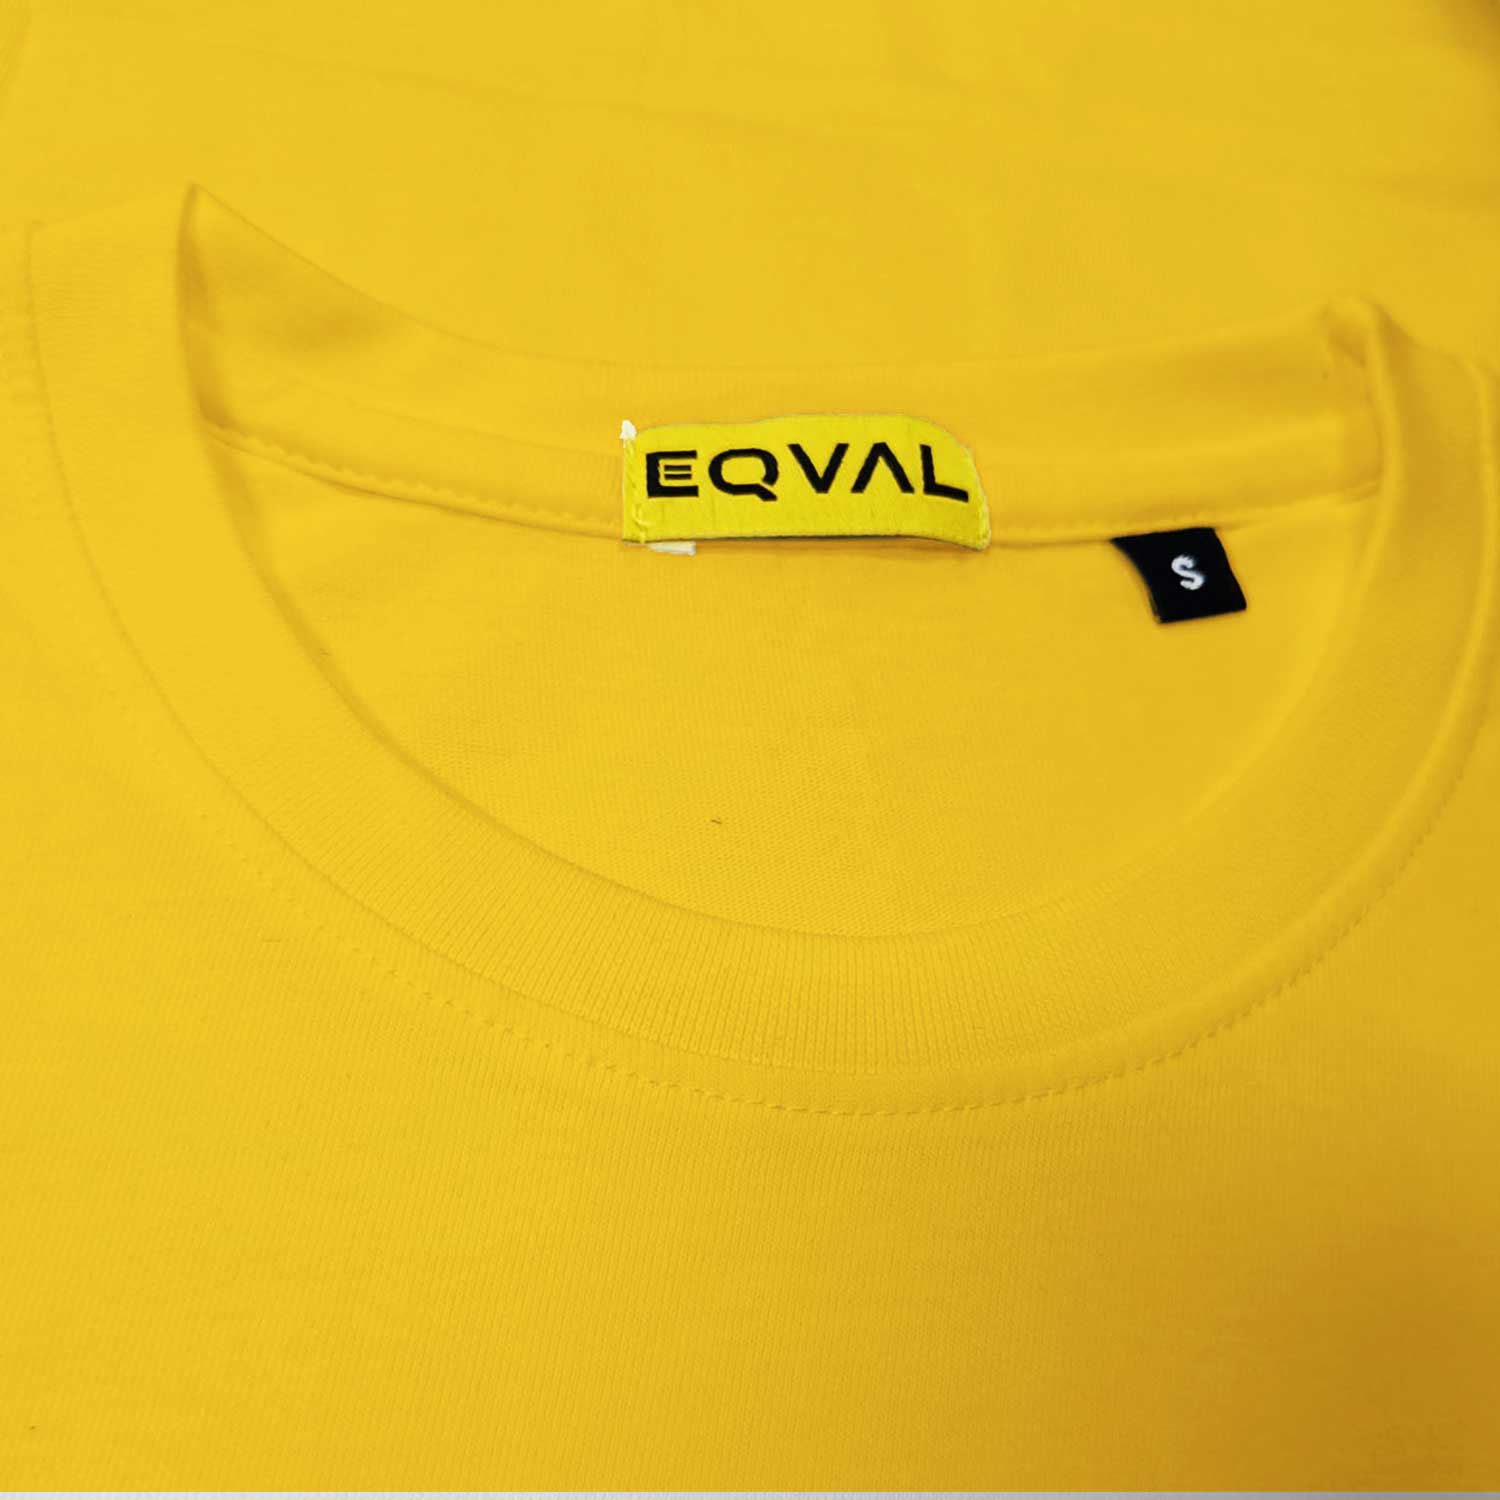 Men's Yellow Strong Printed T-shirt